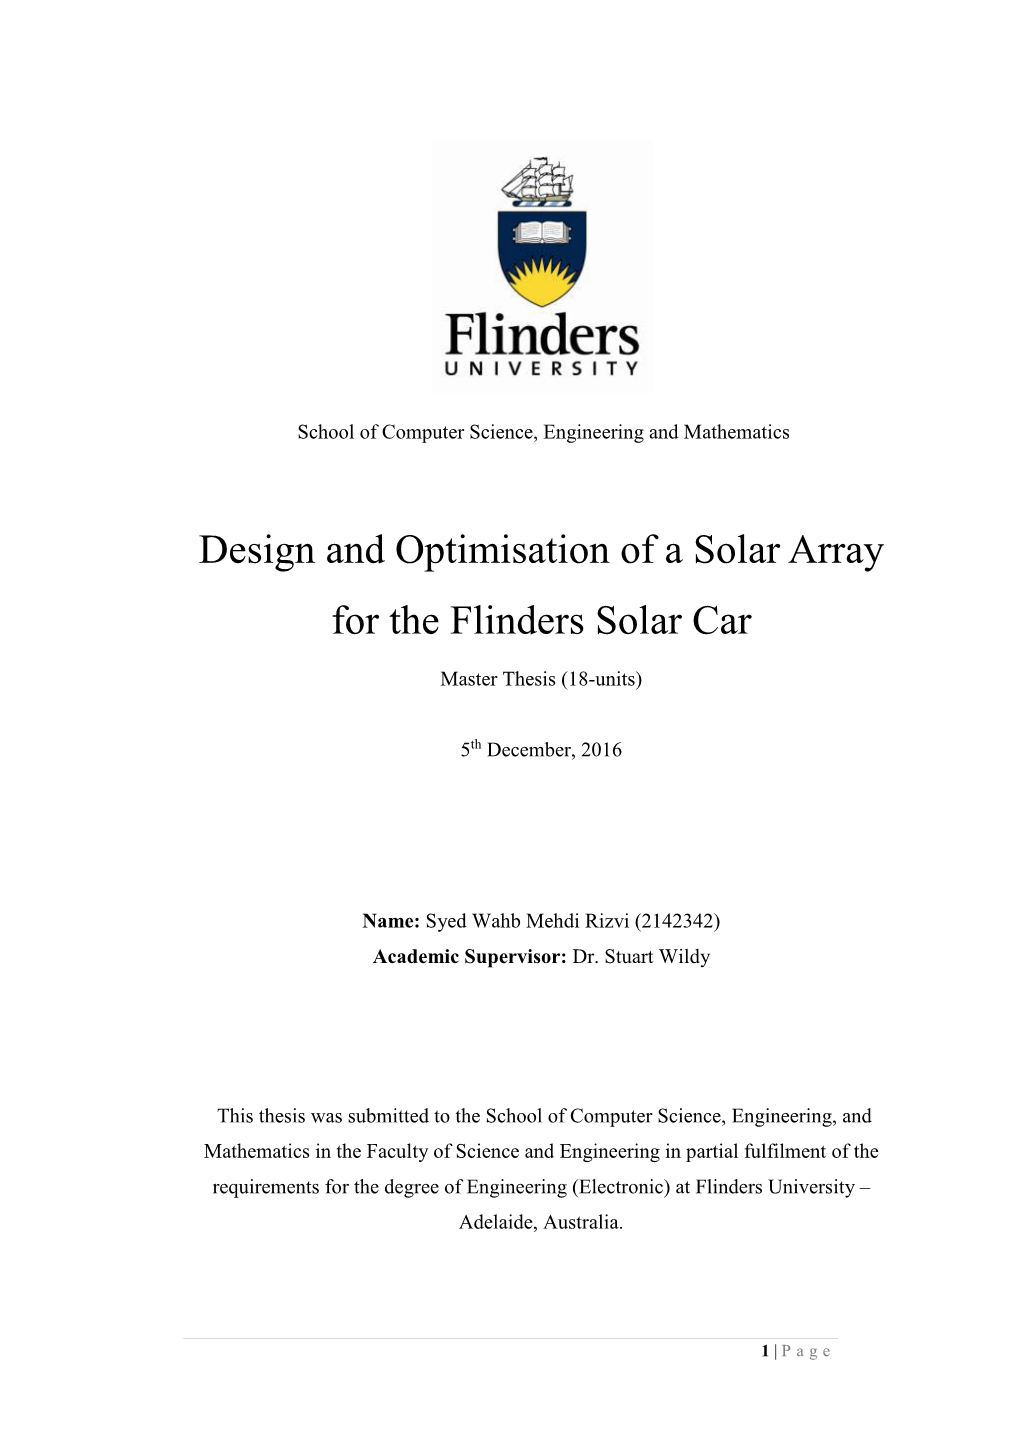 Design and Optimisation of a Solar Array for the Flinders Solar Car